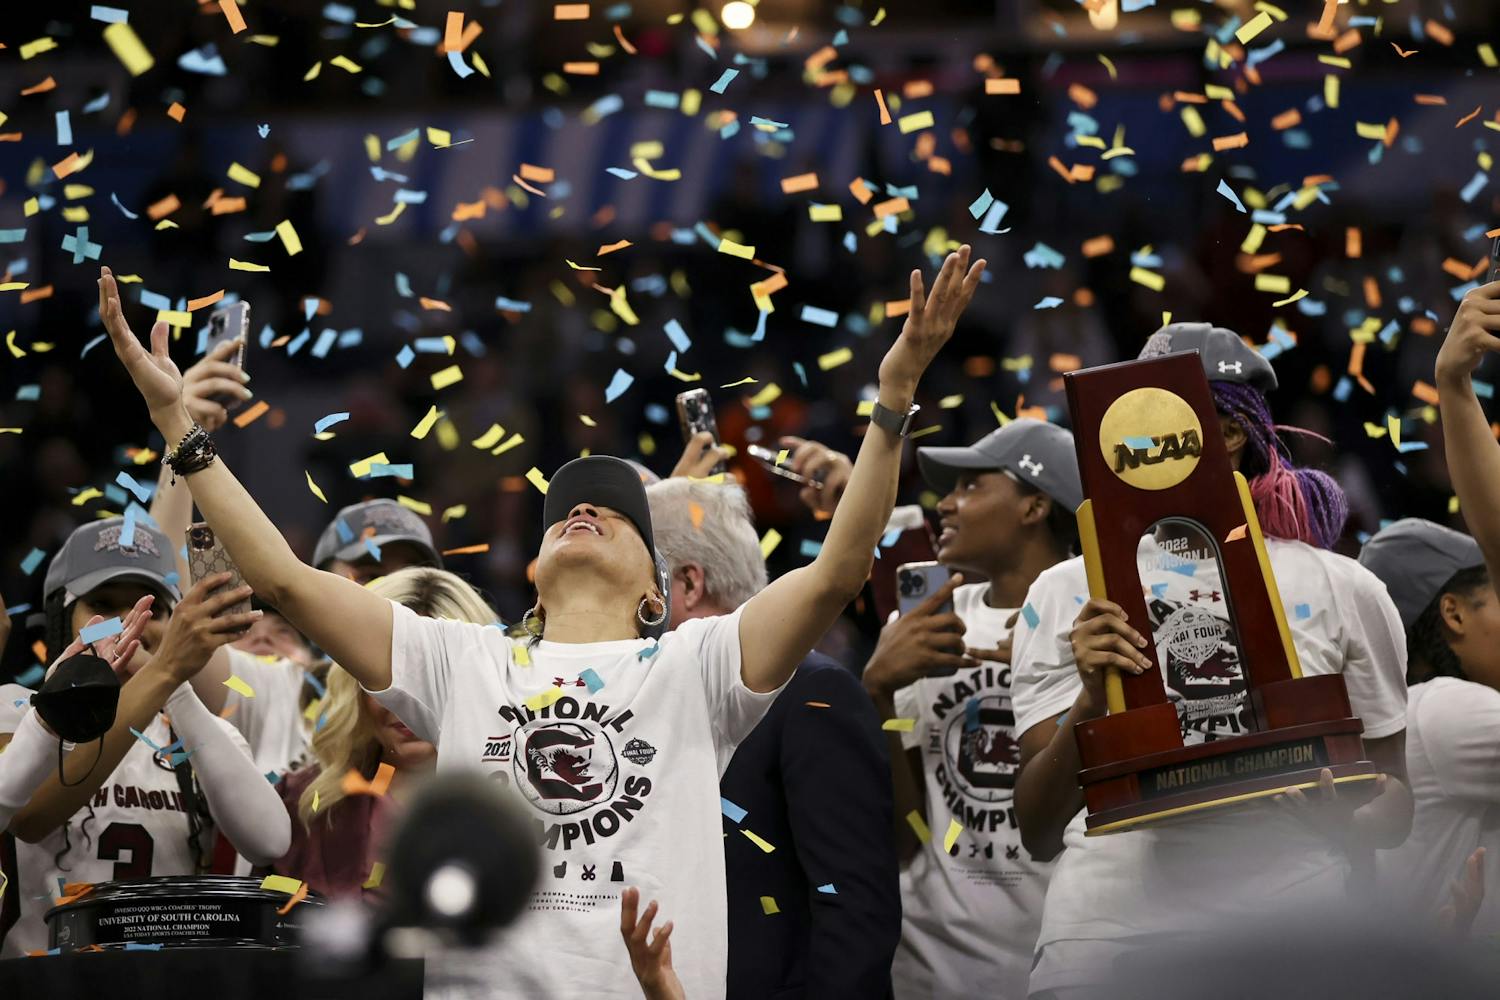 PHOTOS The South Carolina women's basketball team celebrates its 2022